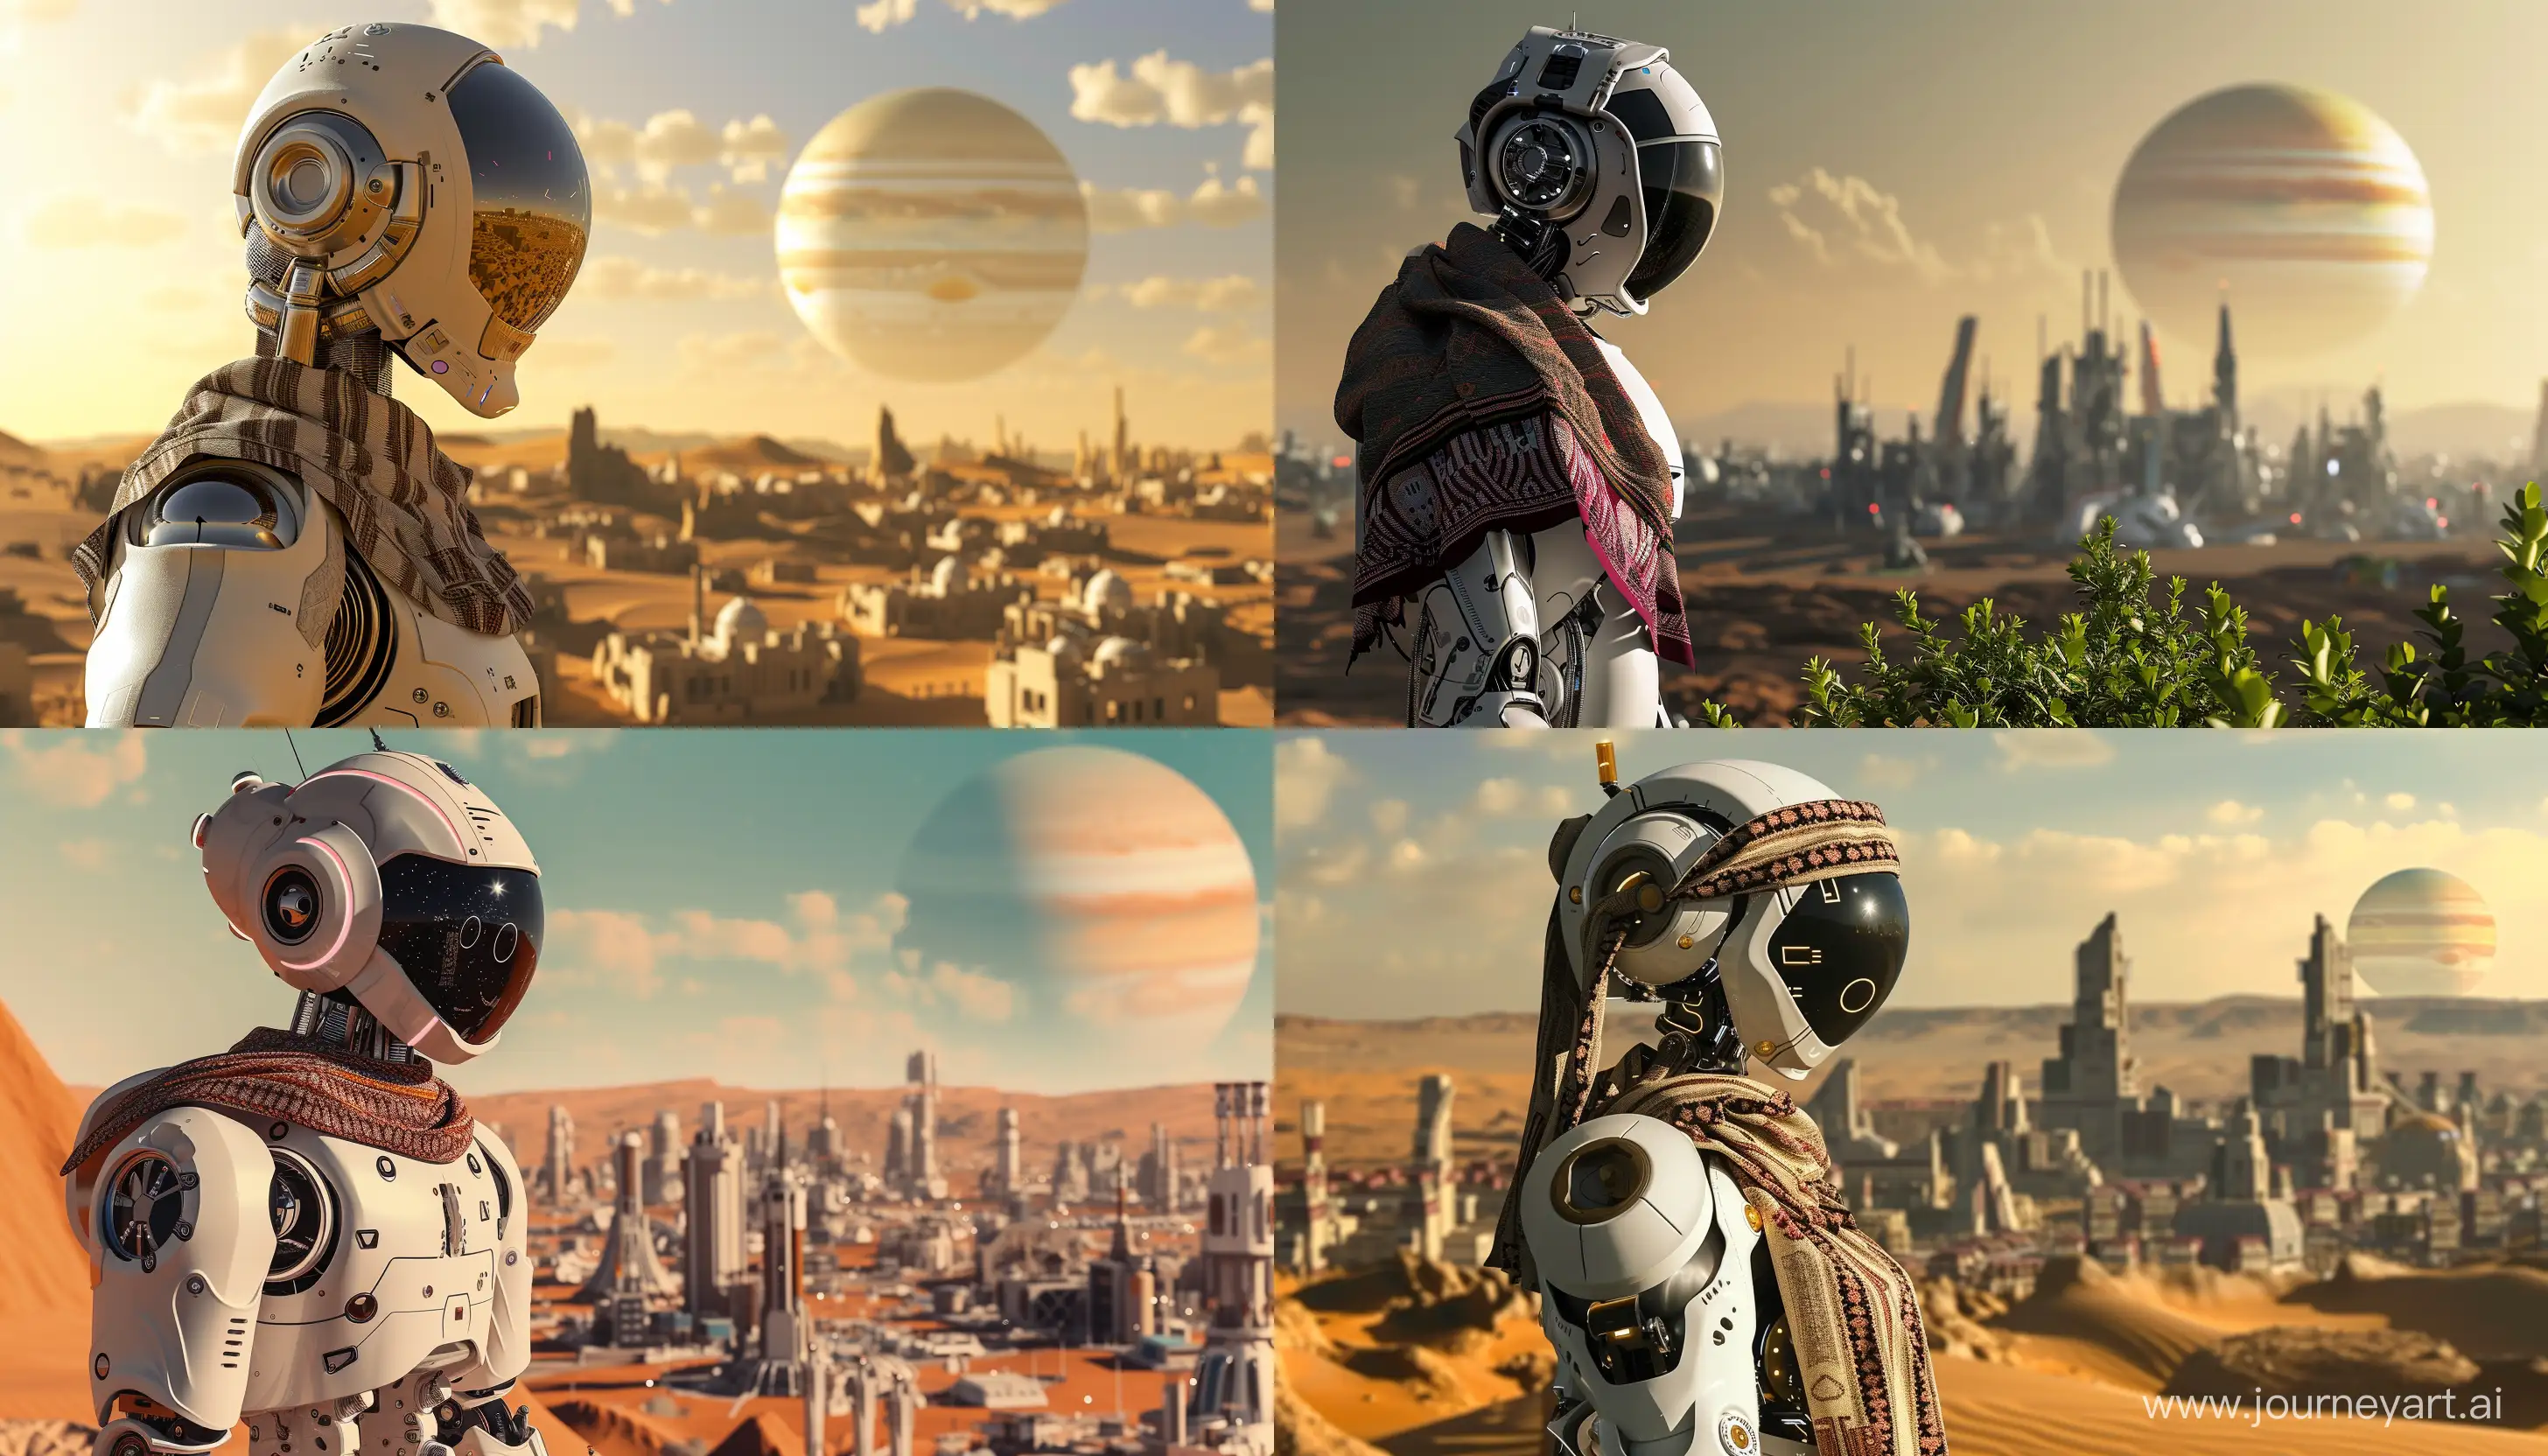 Futuristic-Mars-Robot-Farming-Amidst-a-Skyline-of-Futurestick-City-with-Jupiter